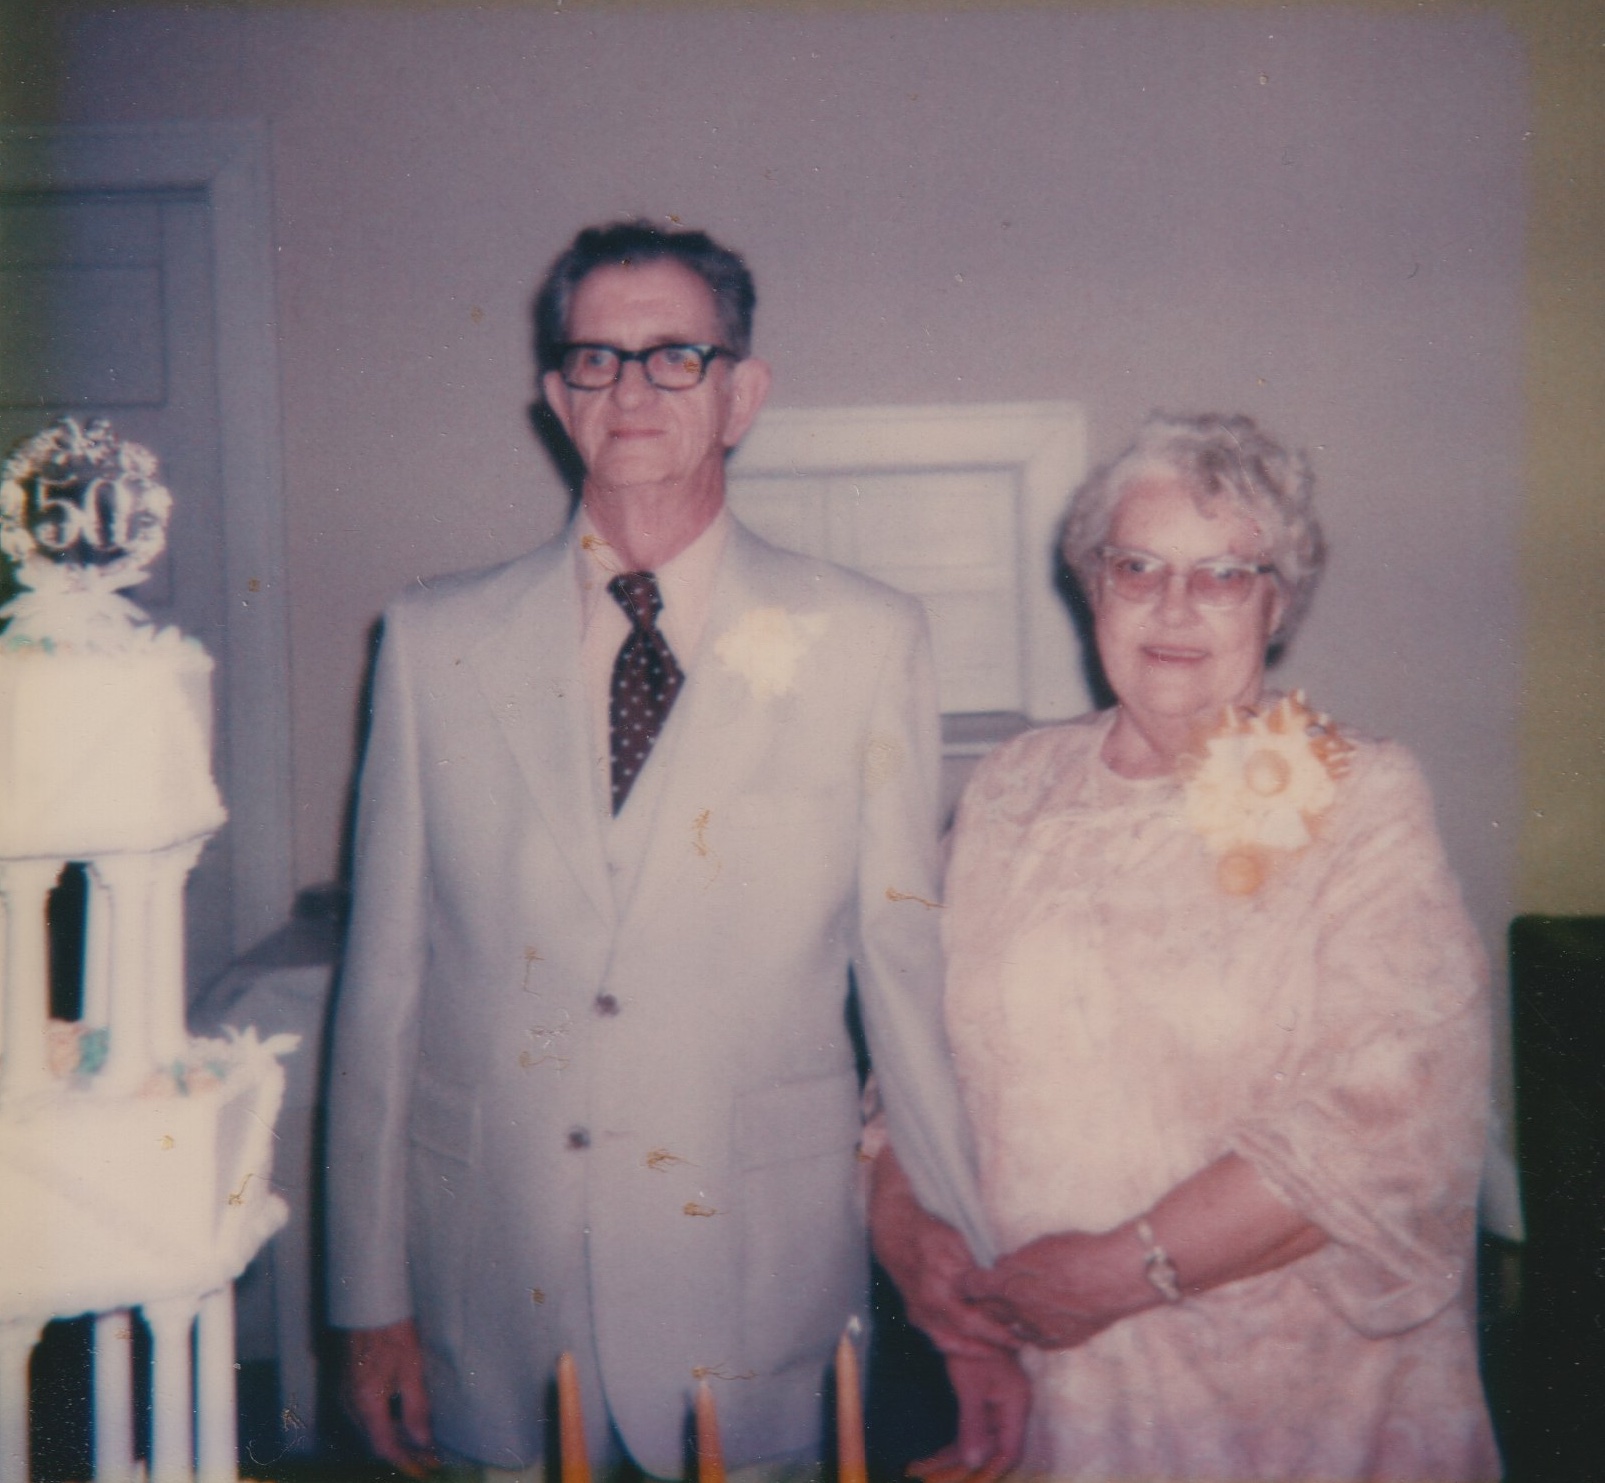 50th anniversary photo of Walter "Dallas" Martin and Kitty Cutright Morgan